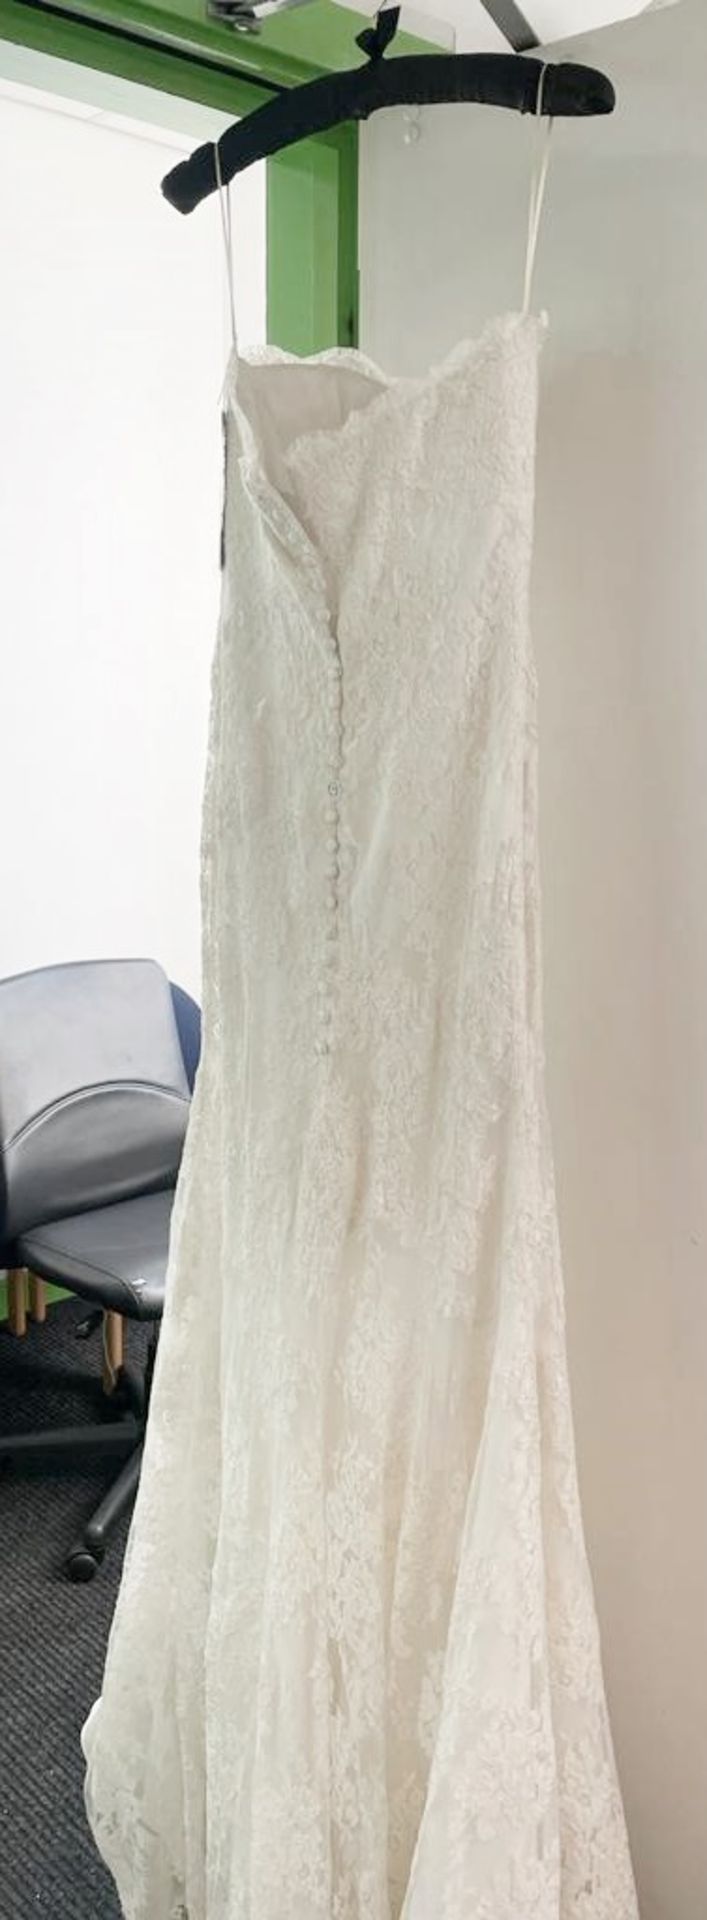 1 x ANNASUL Y 'Zelma' Designer Wedding Dress Bridal Gown - Size: UK 12 - Original RRP £1,750 - Image 3 of 11